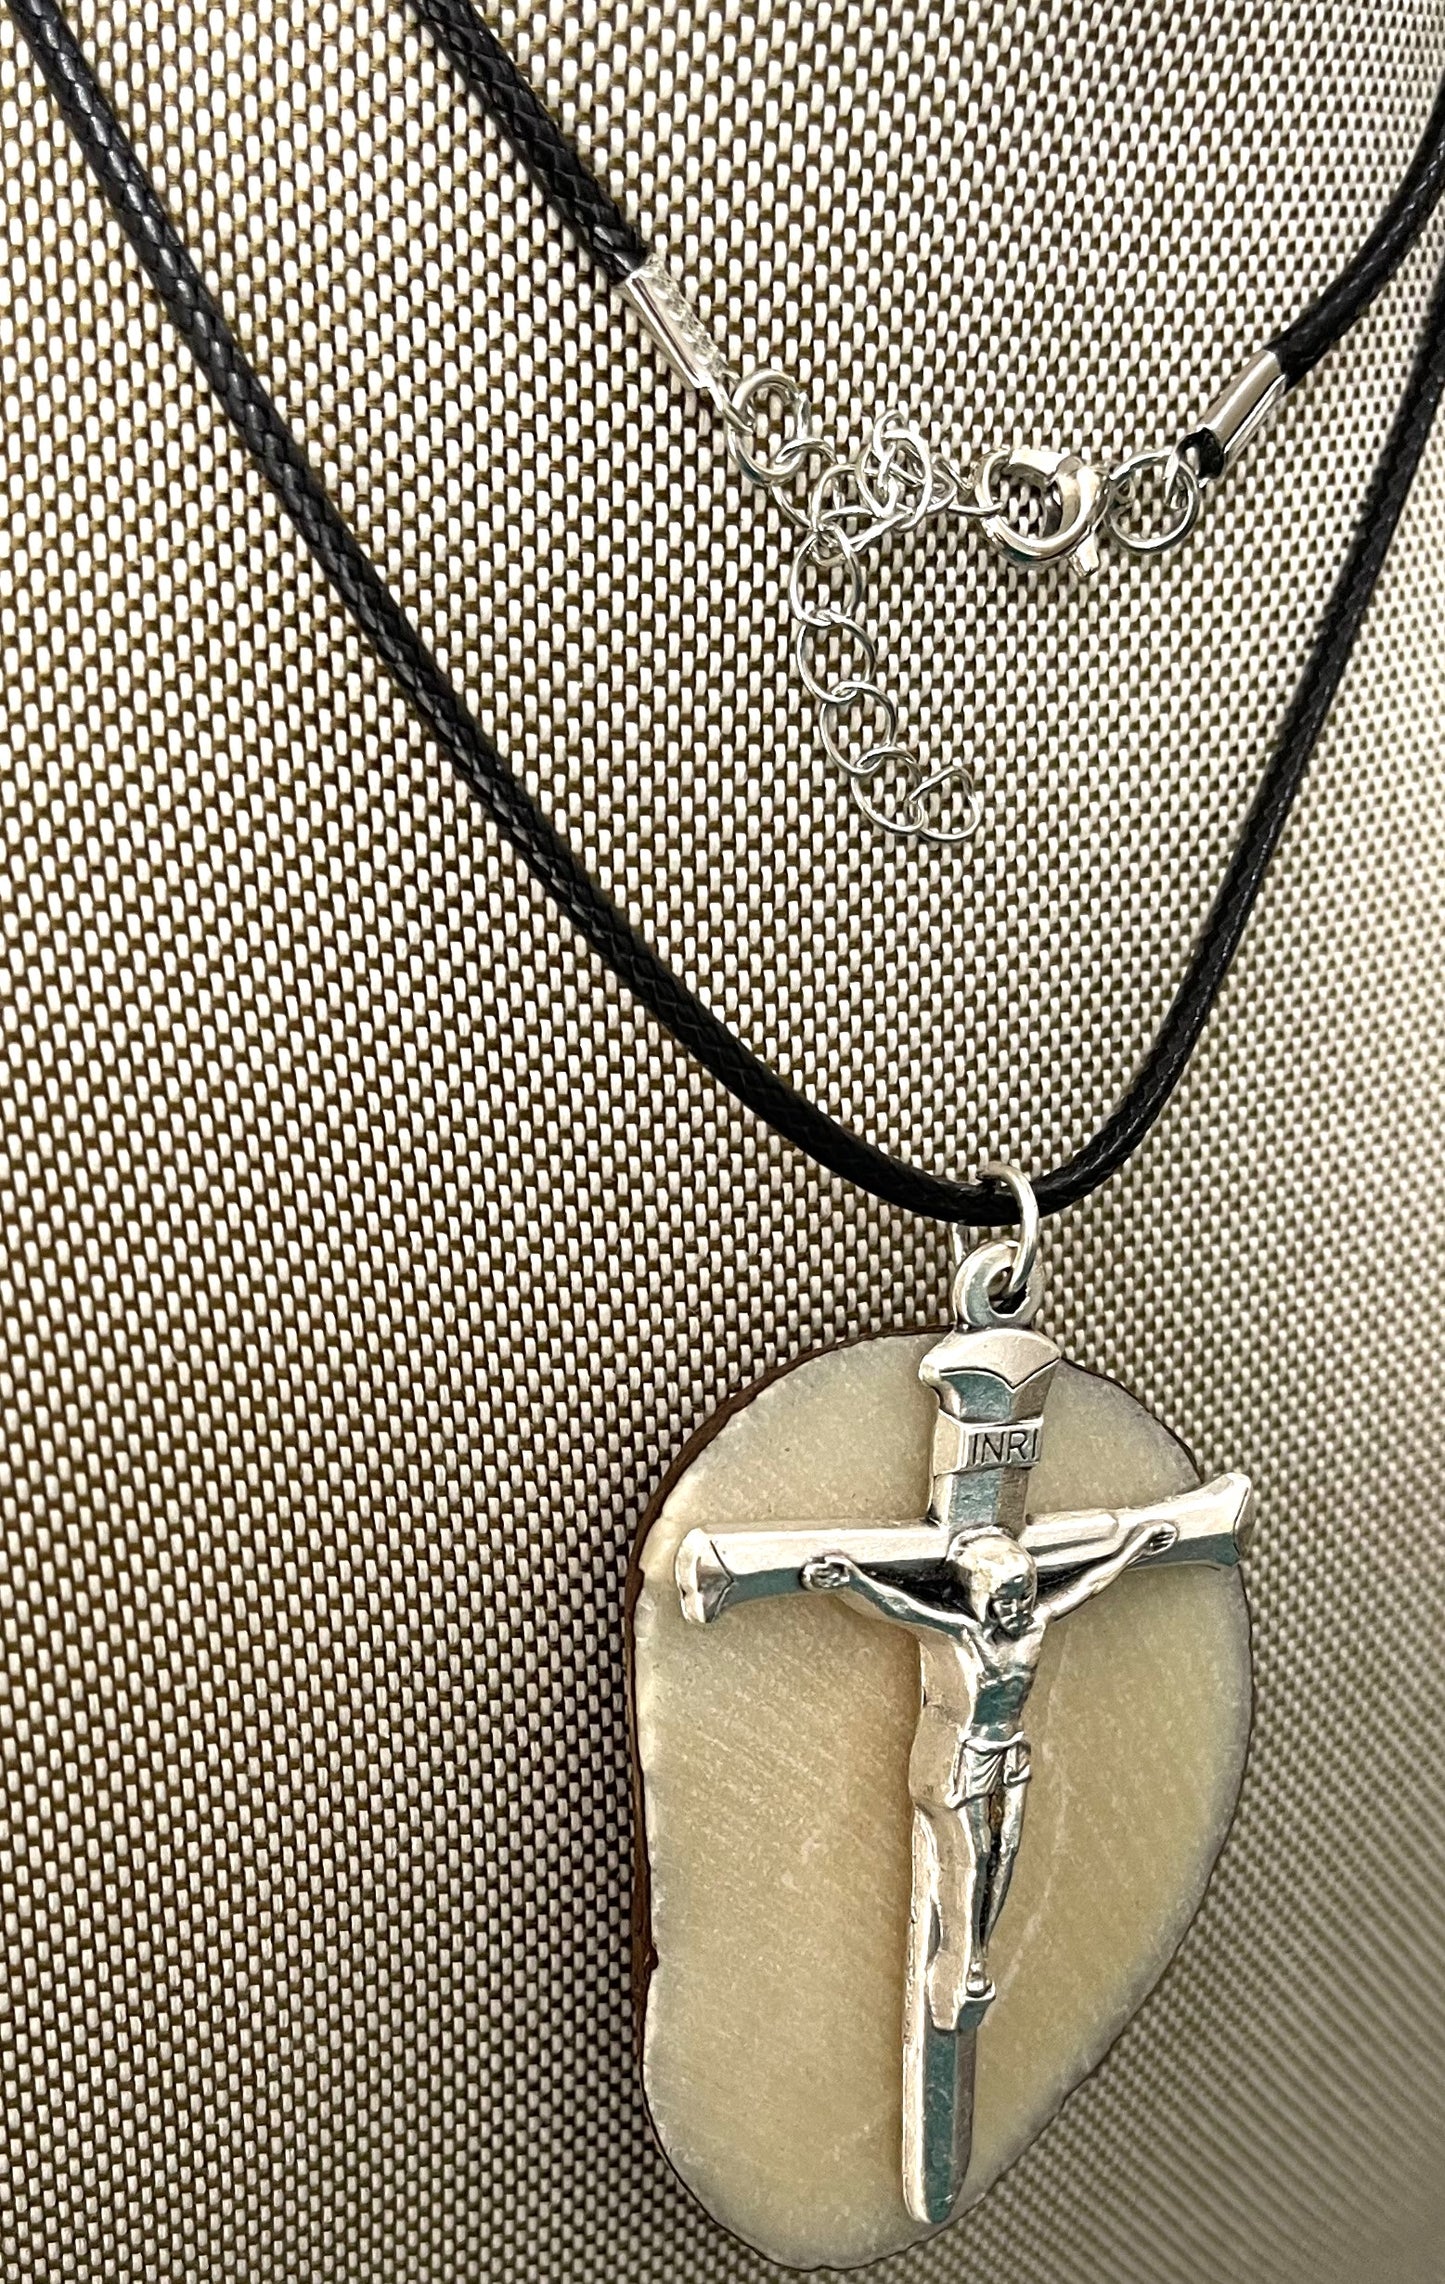 Christian Cross Metal On Tagua Necklace Pendant Panama